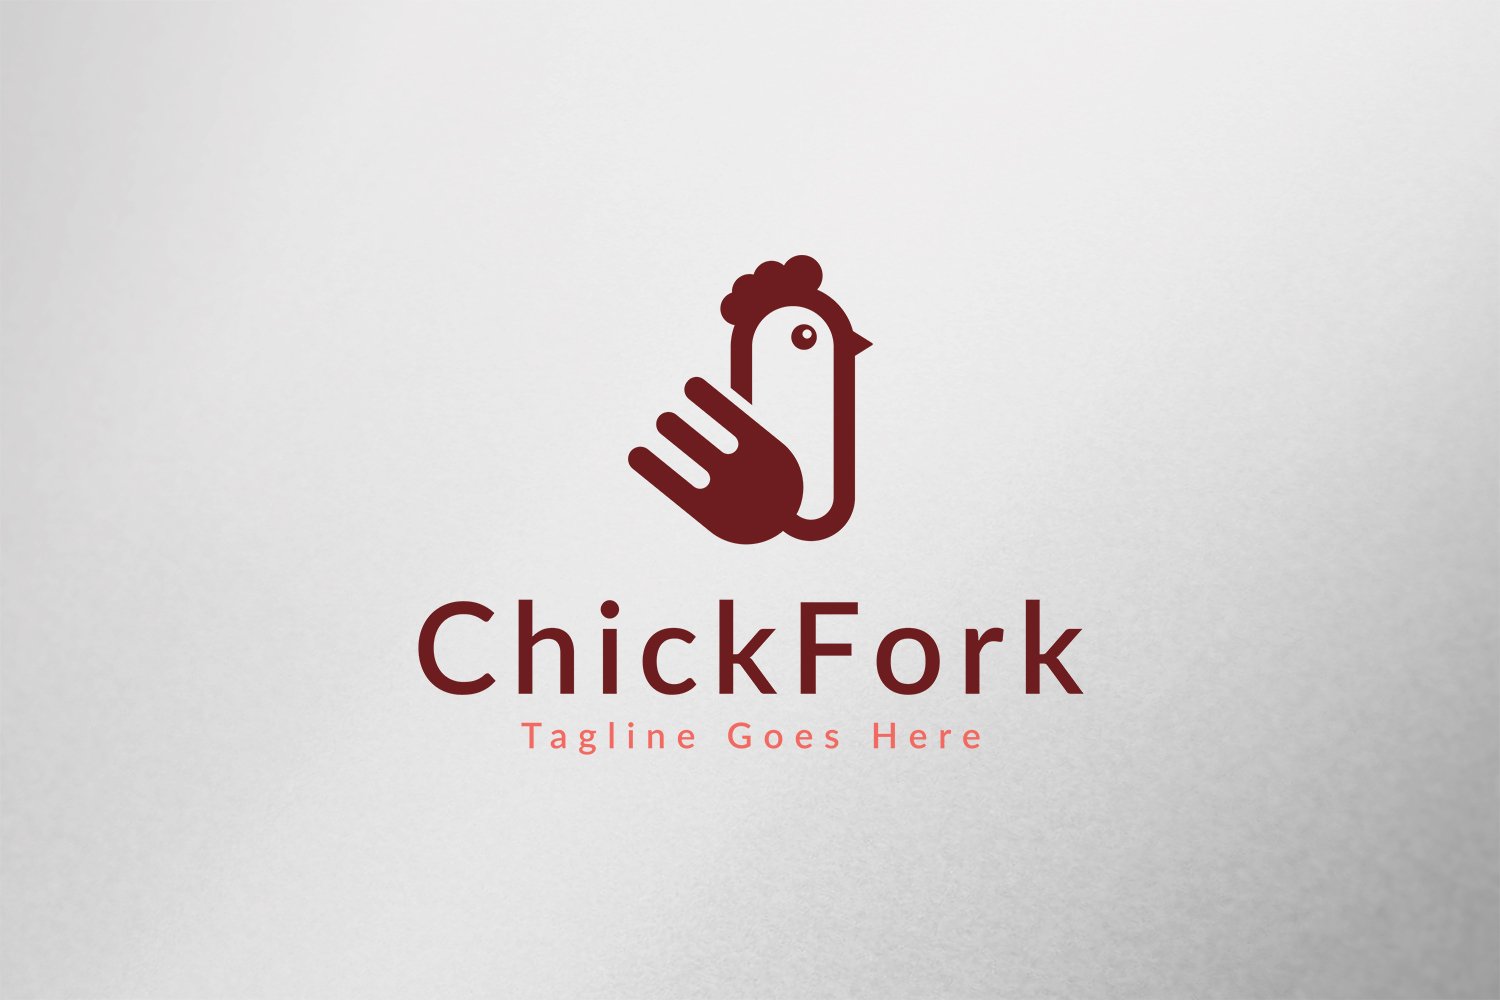 Chicken Fork Logo cover image.